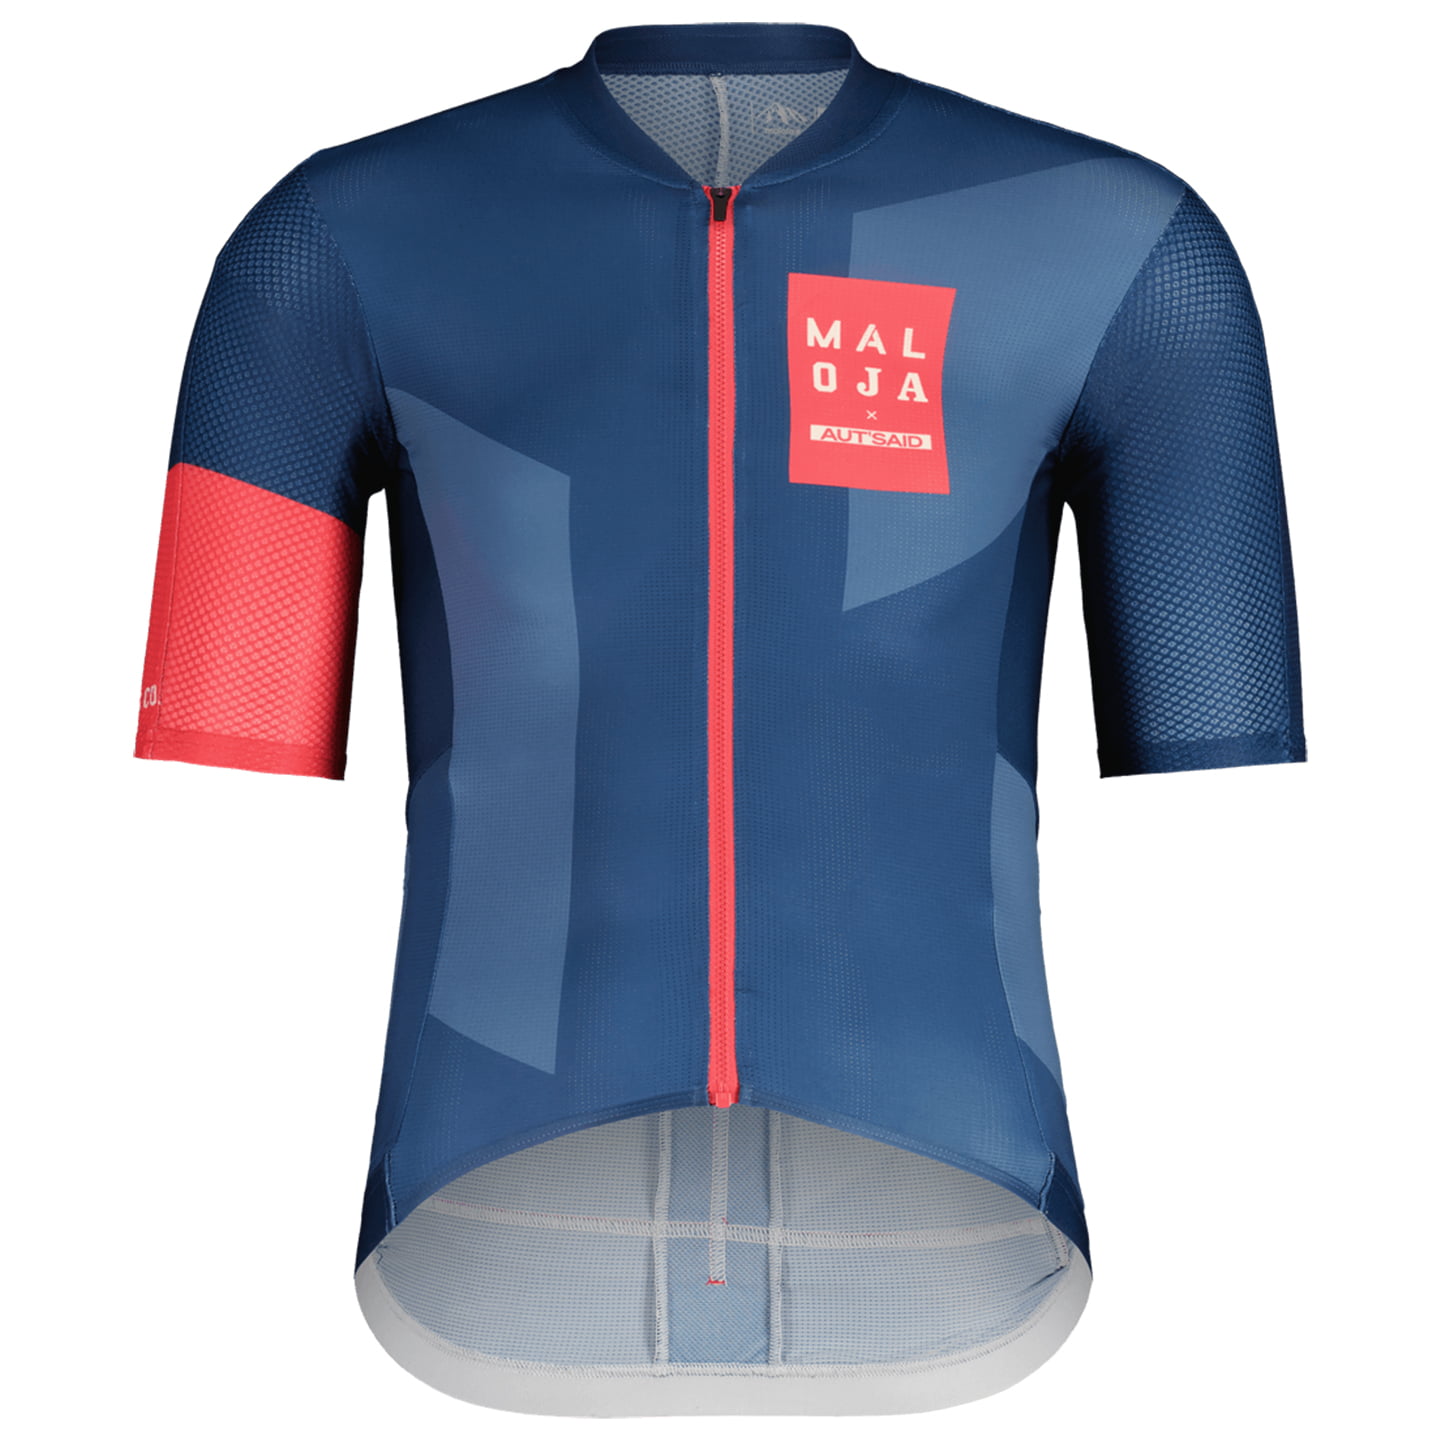 MALOJA PaulM. Gravel Race Short Sleeve Jersey Short Sleeve Jersey, for men, size S, Cycling jersey, Cycling clothing